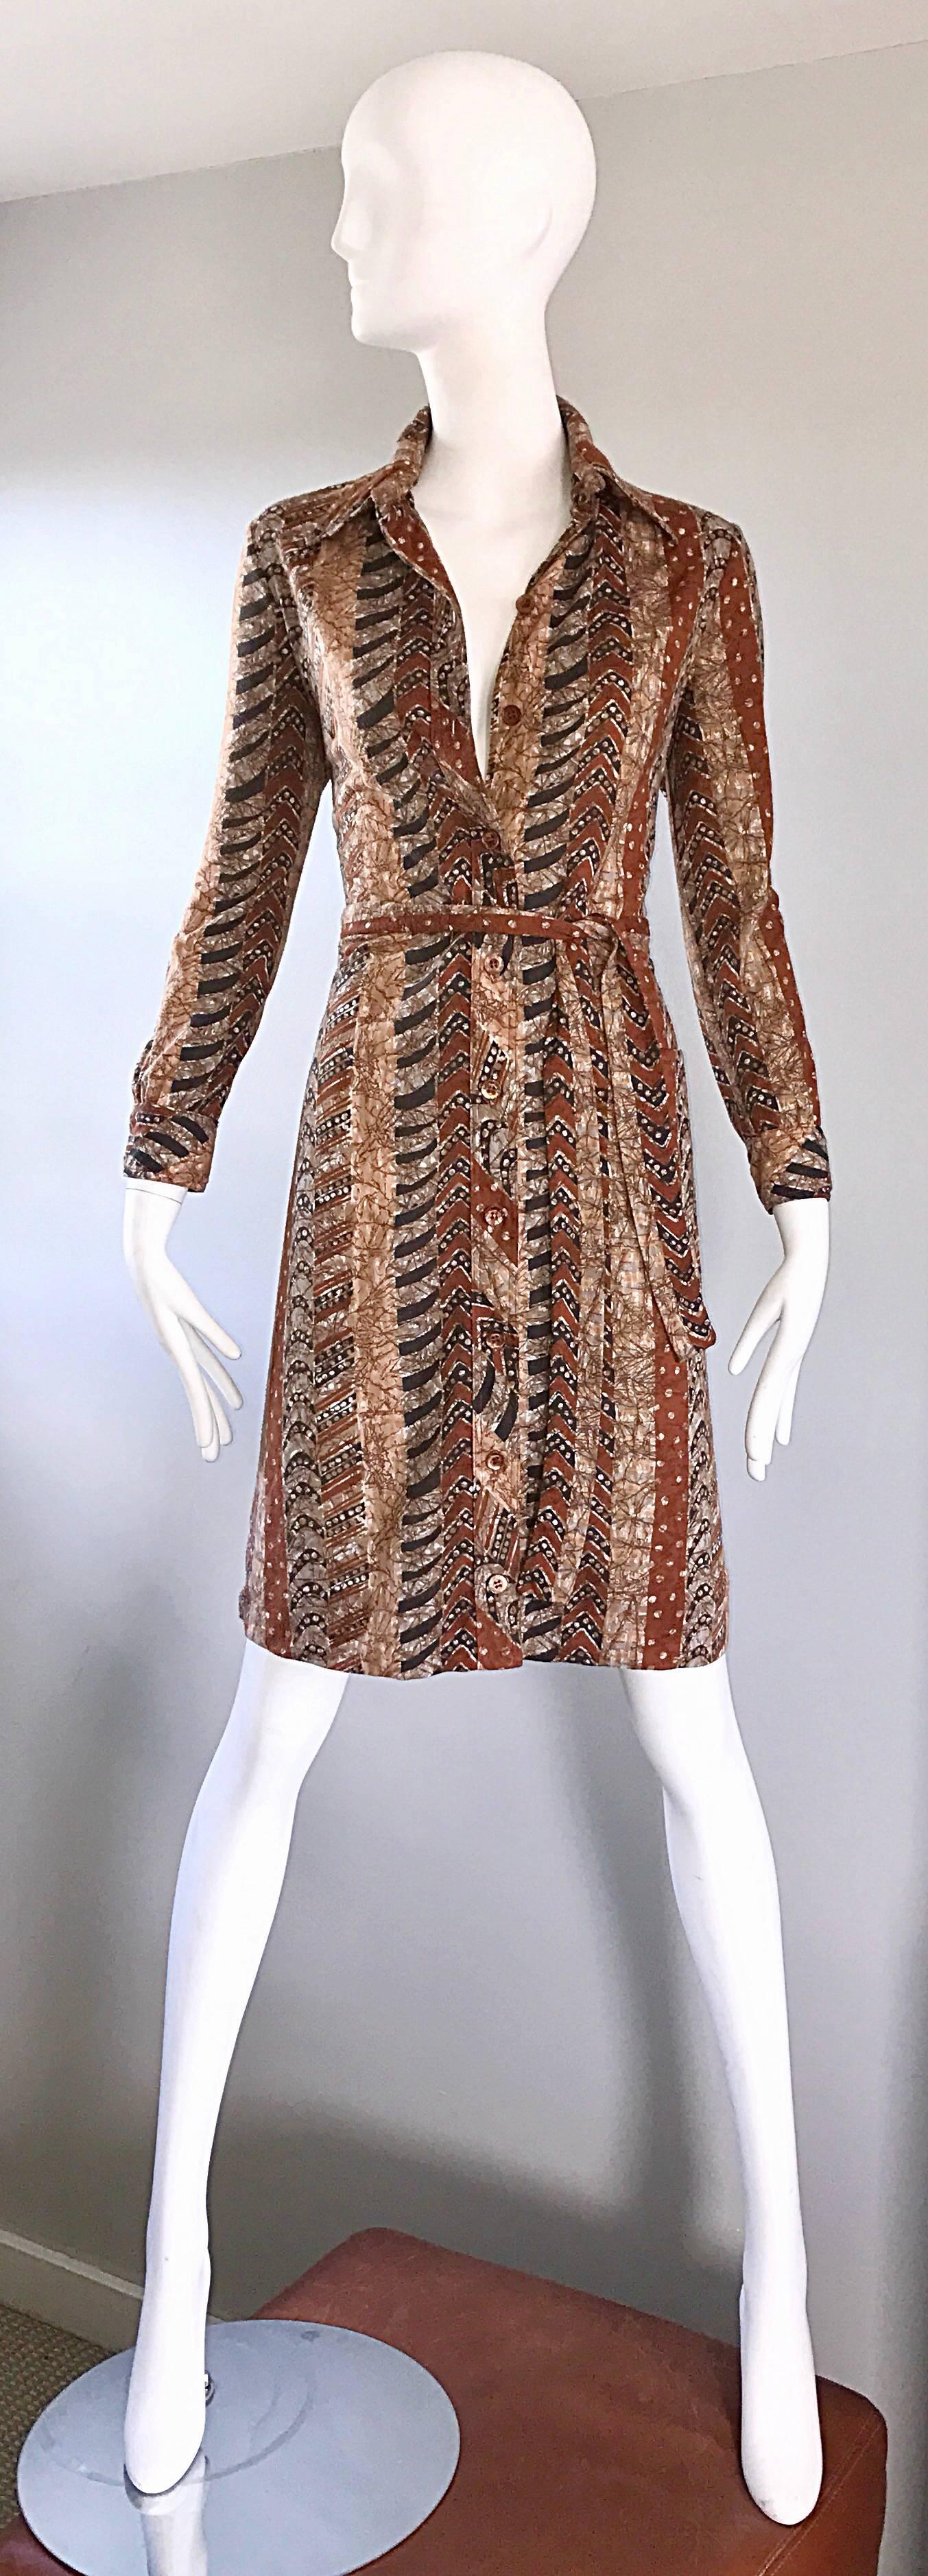 Bonwit Teller 1970s Batik Print Belted Cotton 70s Vintage Brown Safari Dress  For Sale 4